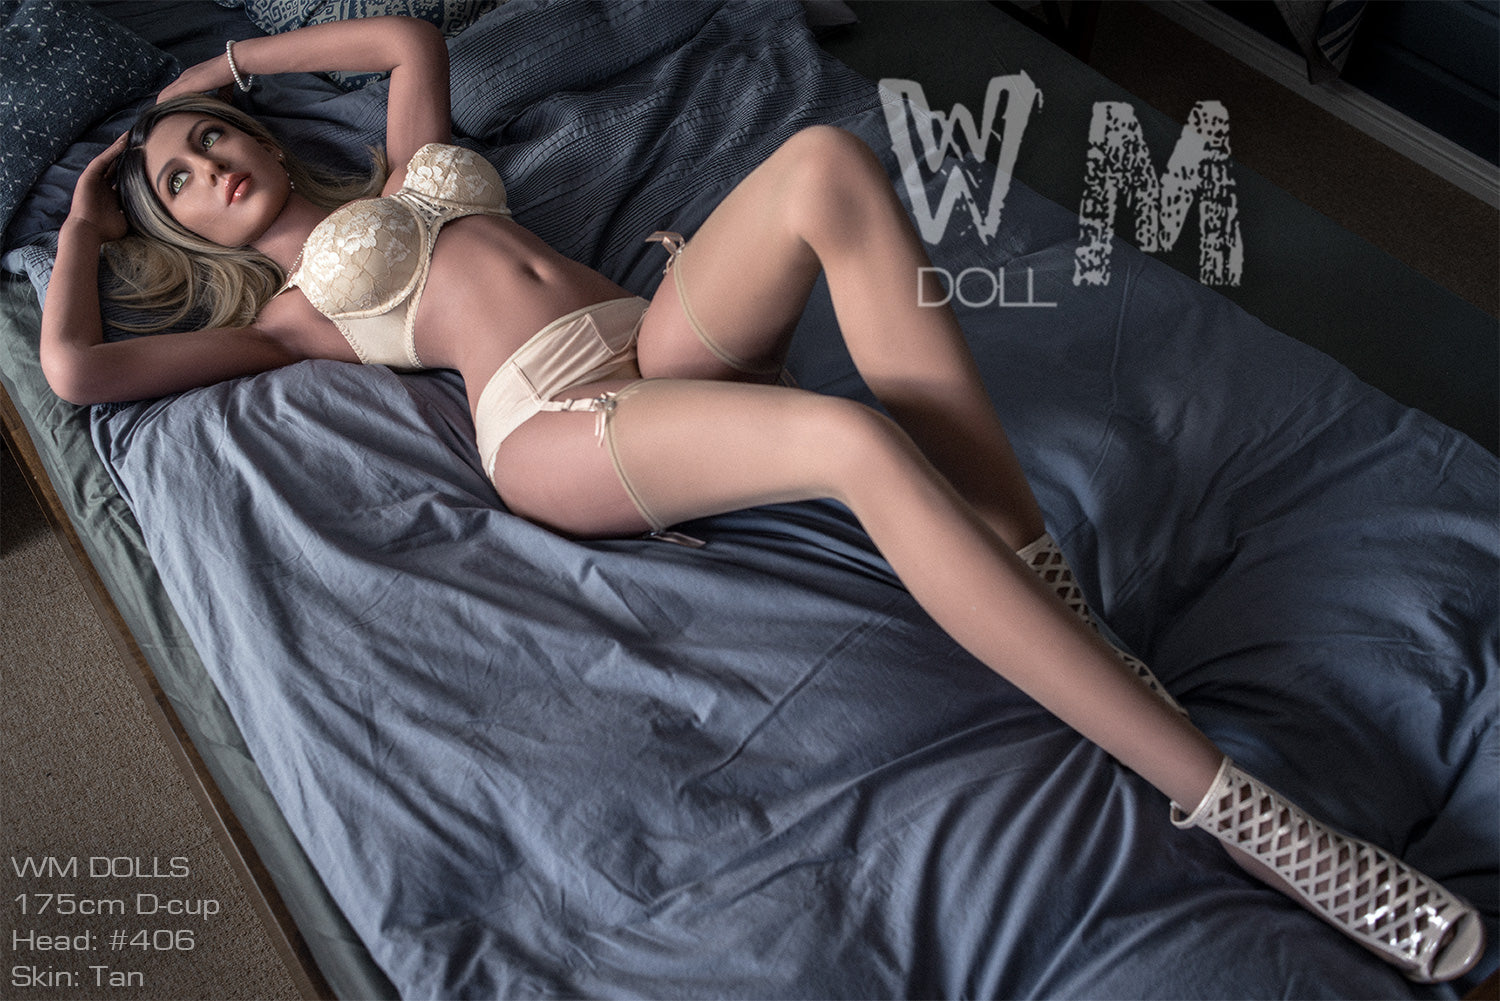 WM DOLL 175 CM D TPE - Sarah | Buy Sex Dolls at DOLLS ACTUALLY